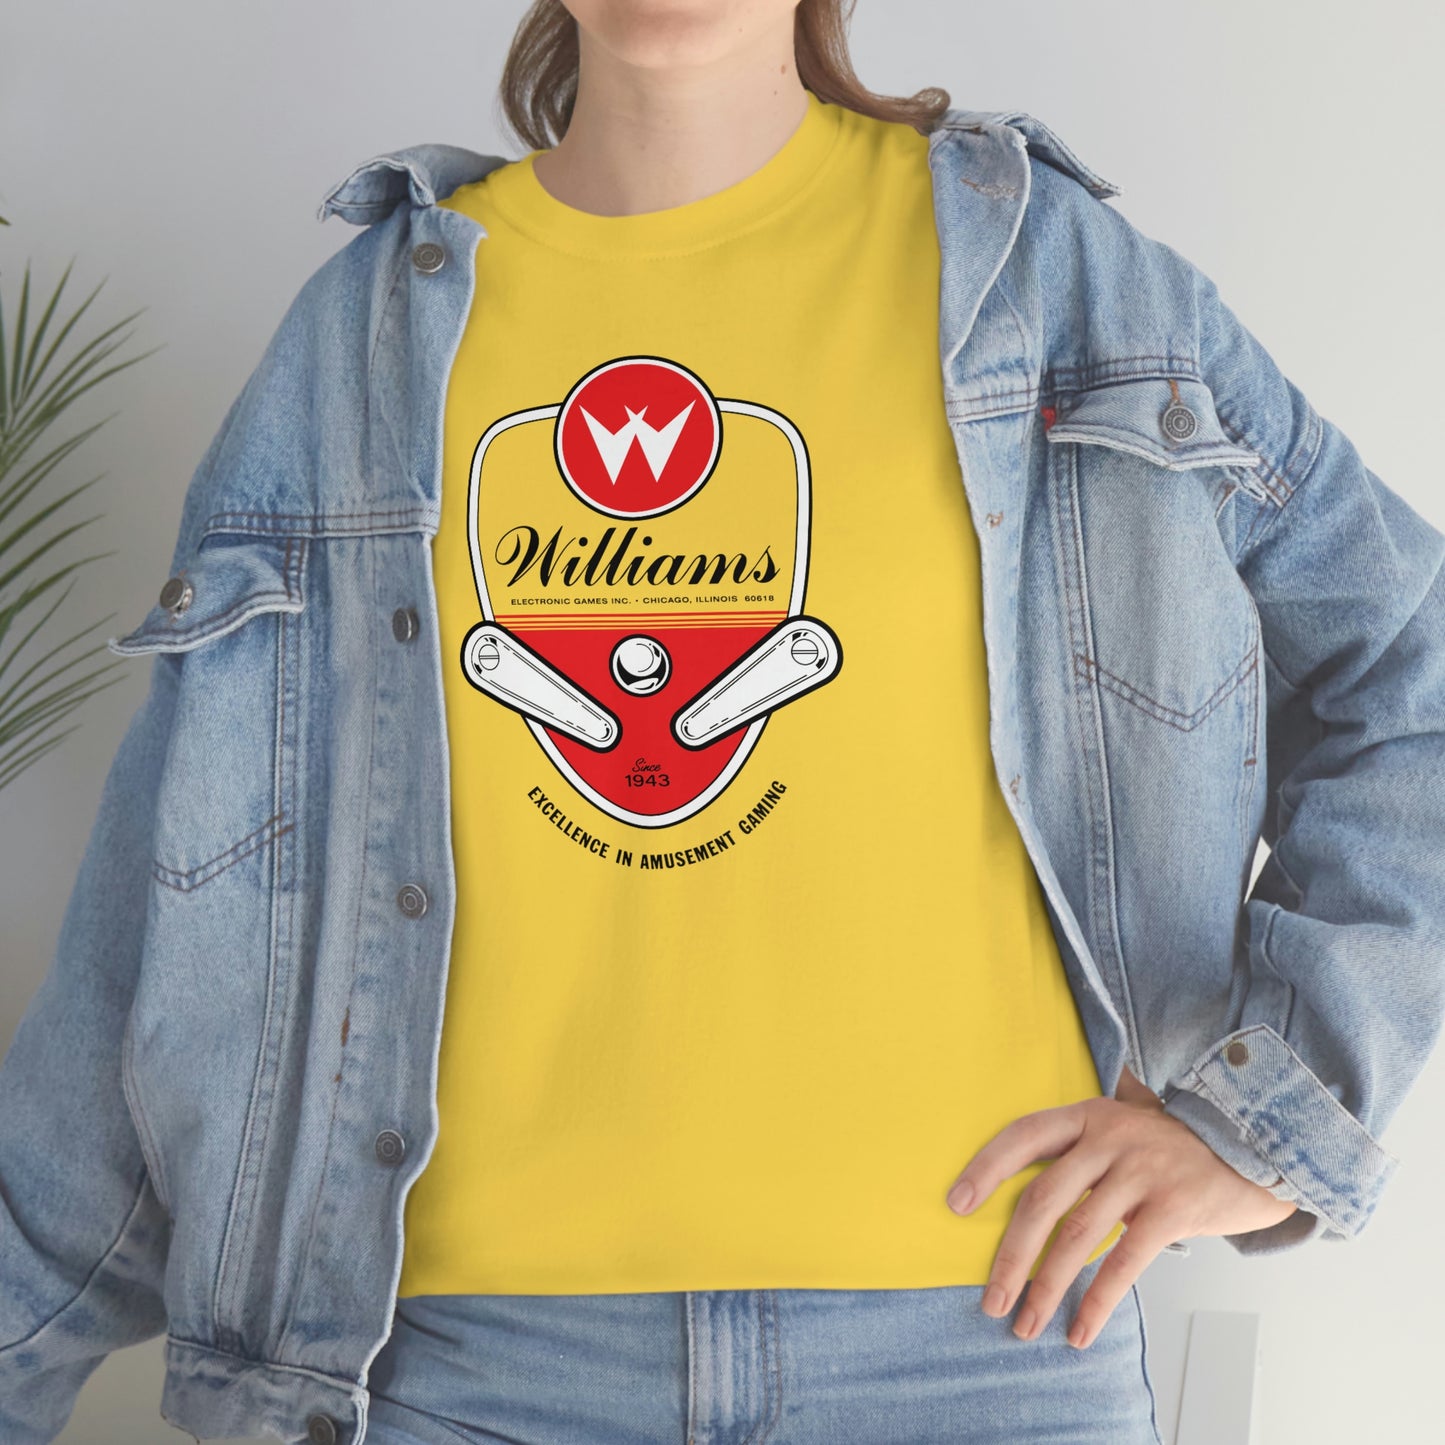 Williams T-Shirt